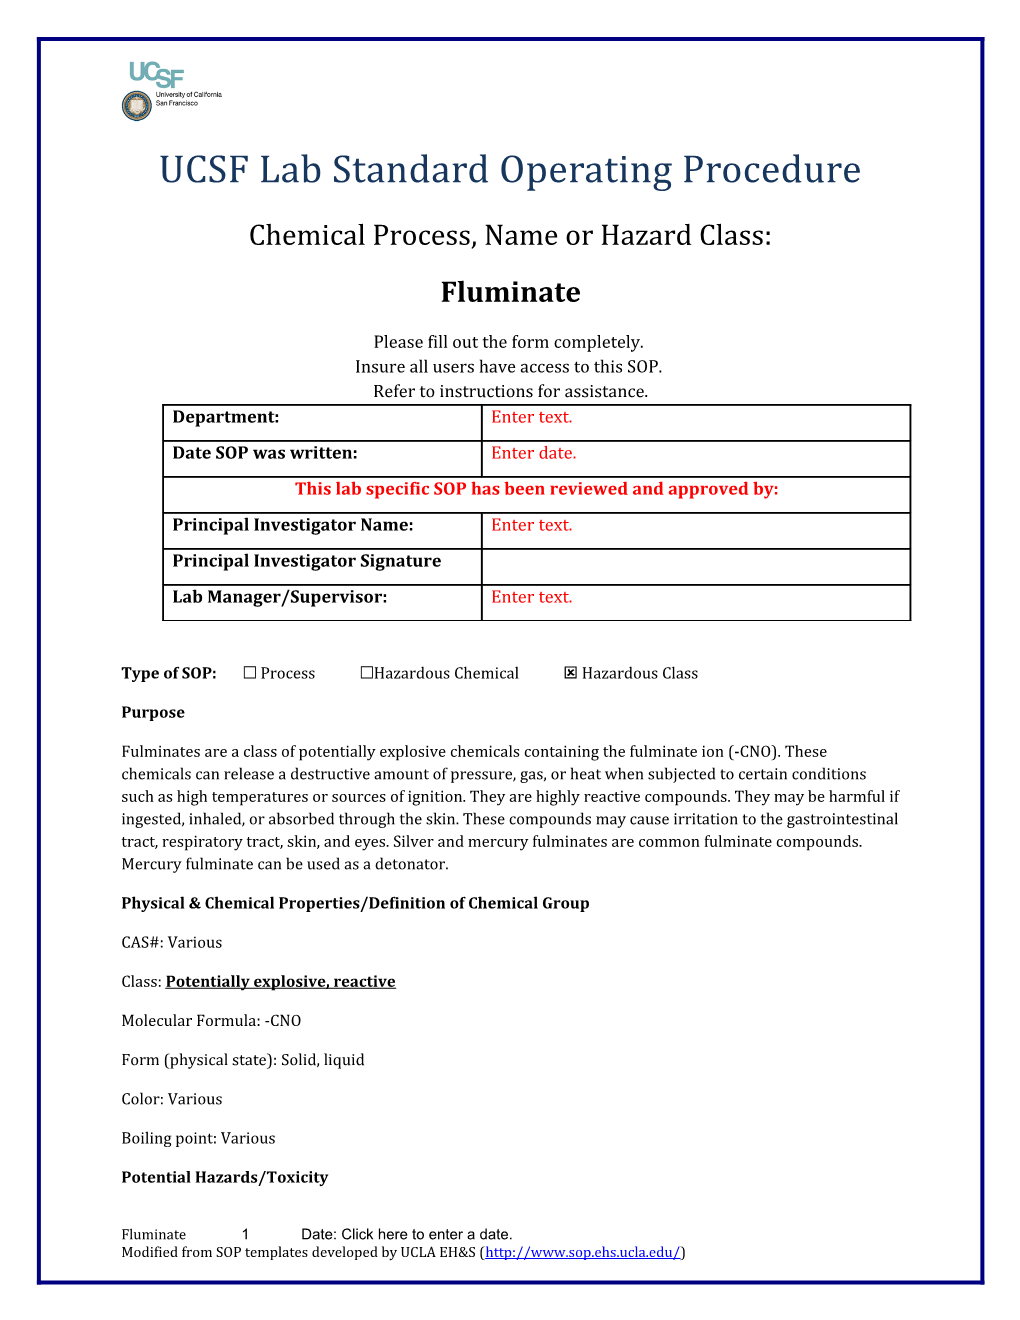 UCSF Lab Standard Operating Procedure s47